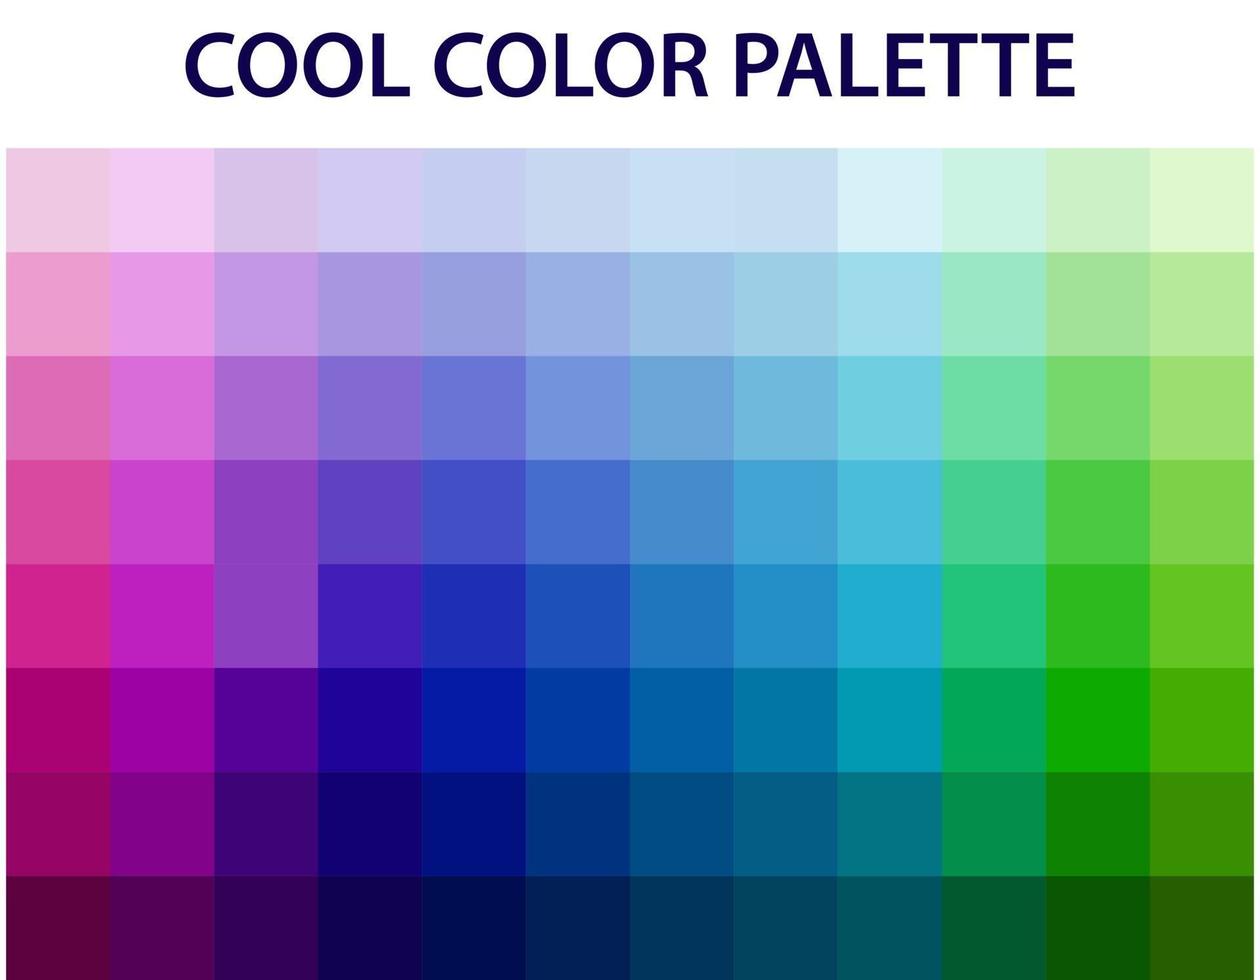 Vektorgrafik der coolen Farbpalette. abstrakte farbige Palettenanleitung. vektor